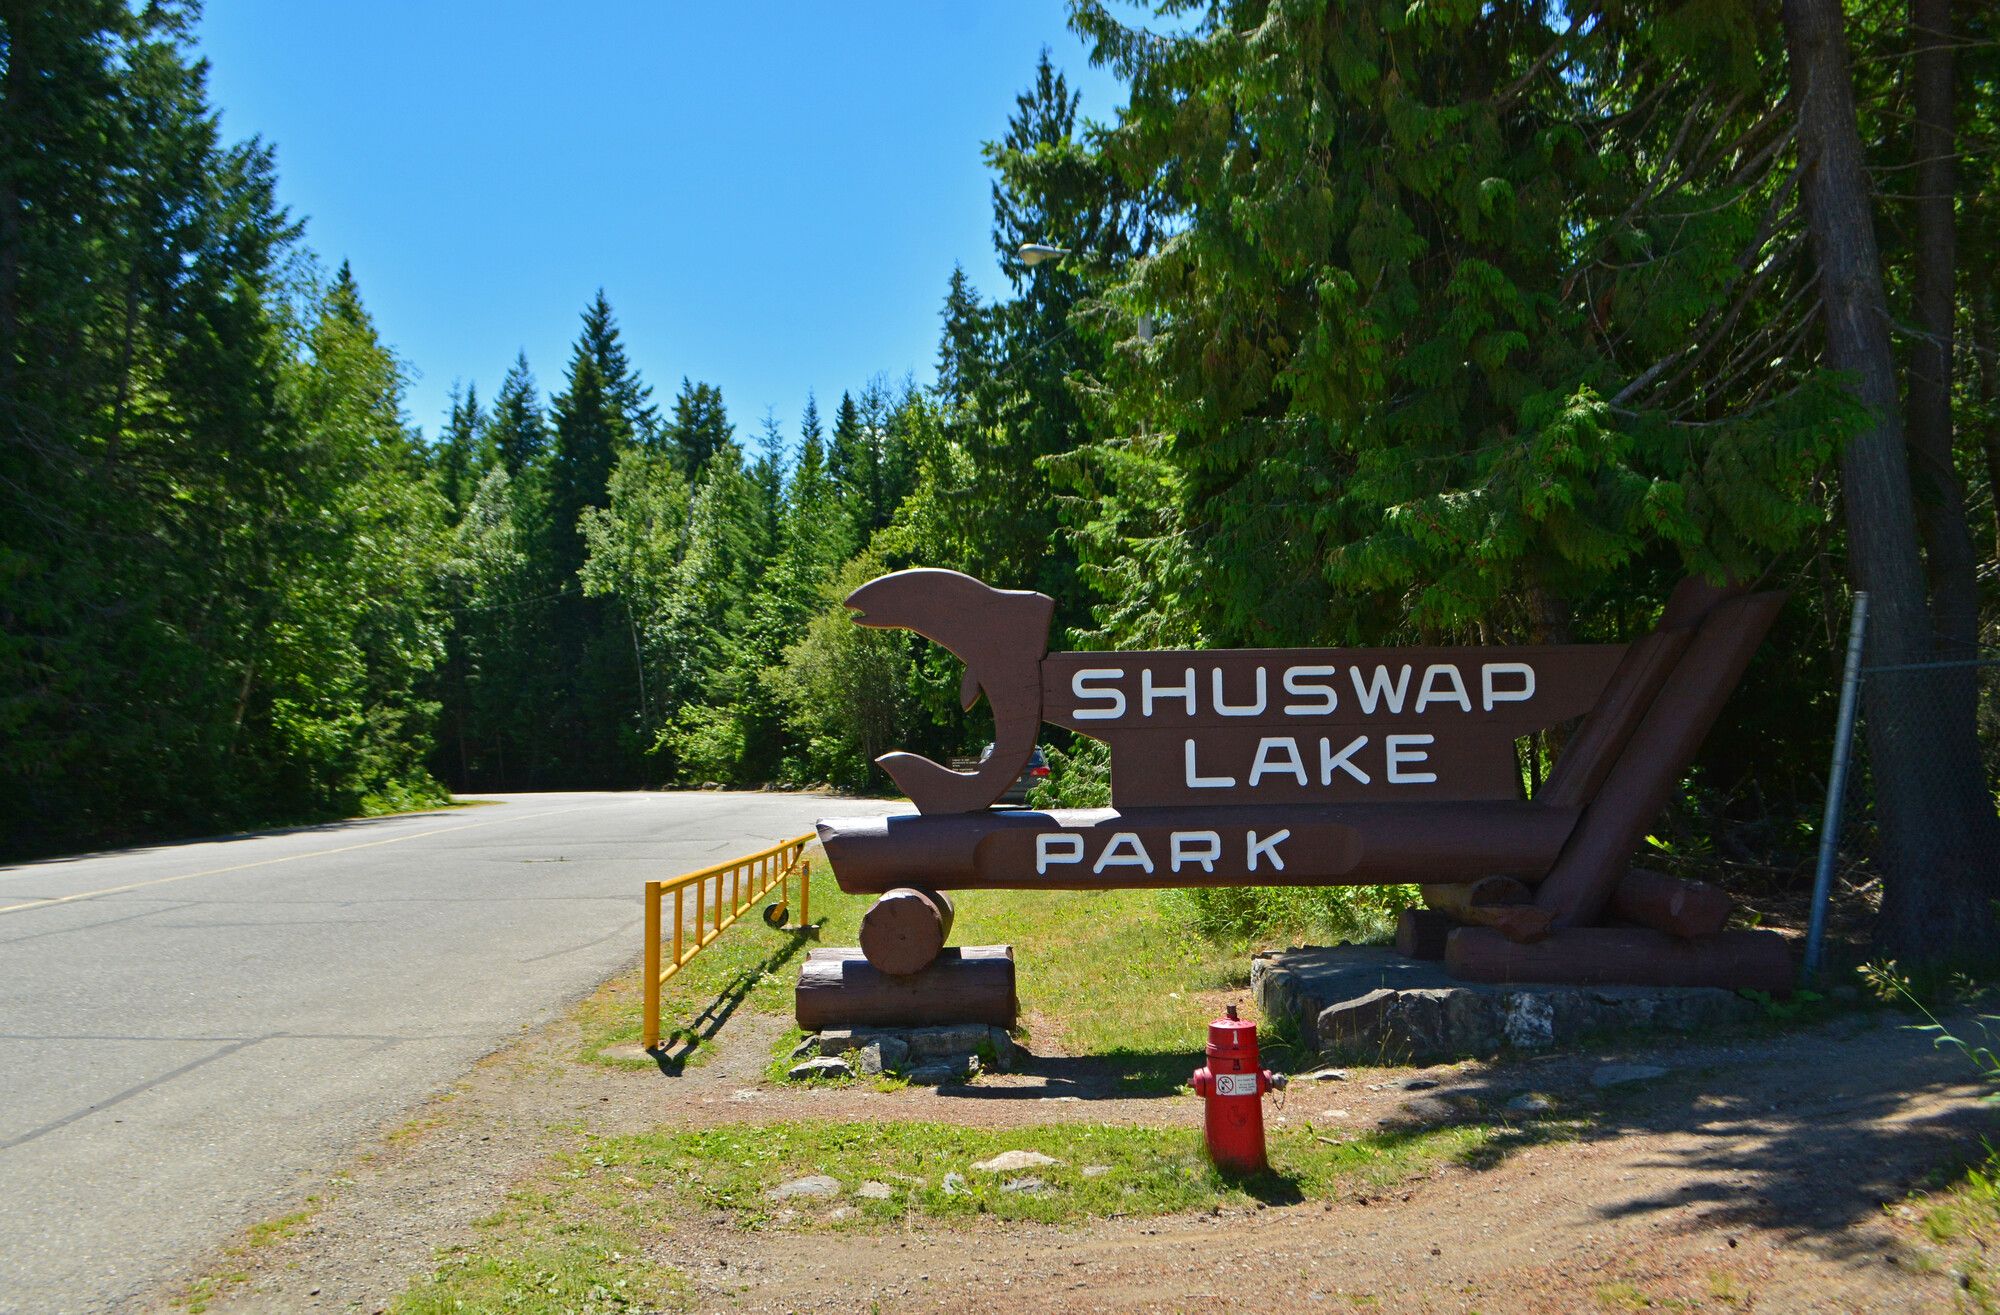 Shuswap Lake Park entrance sign.